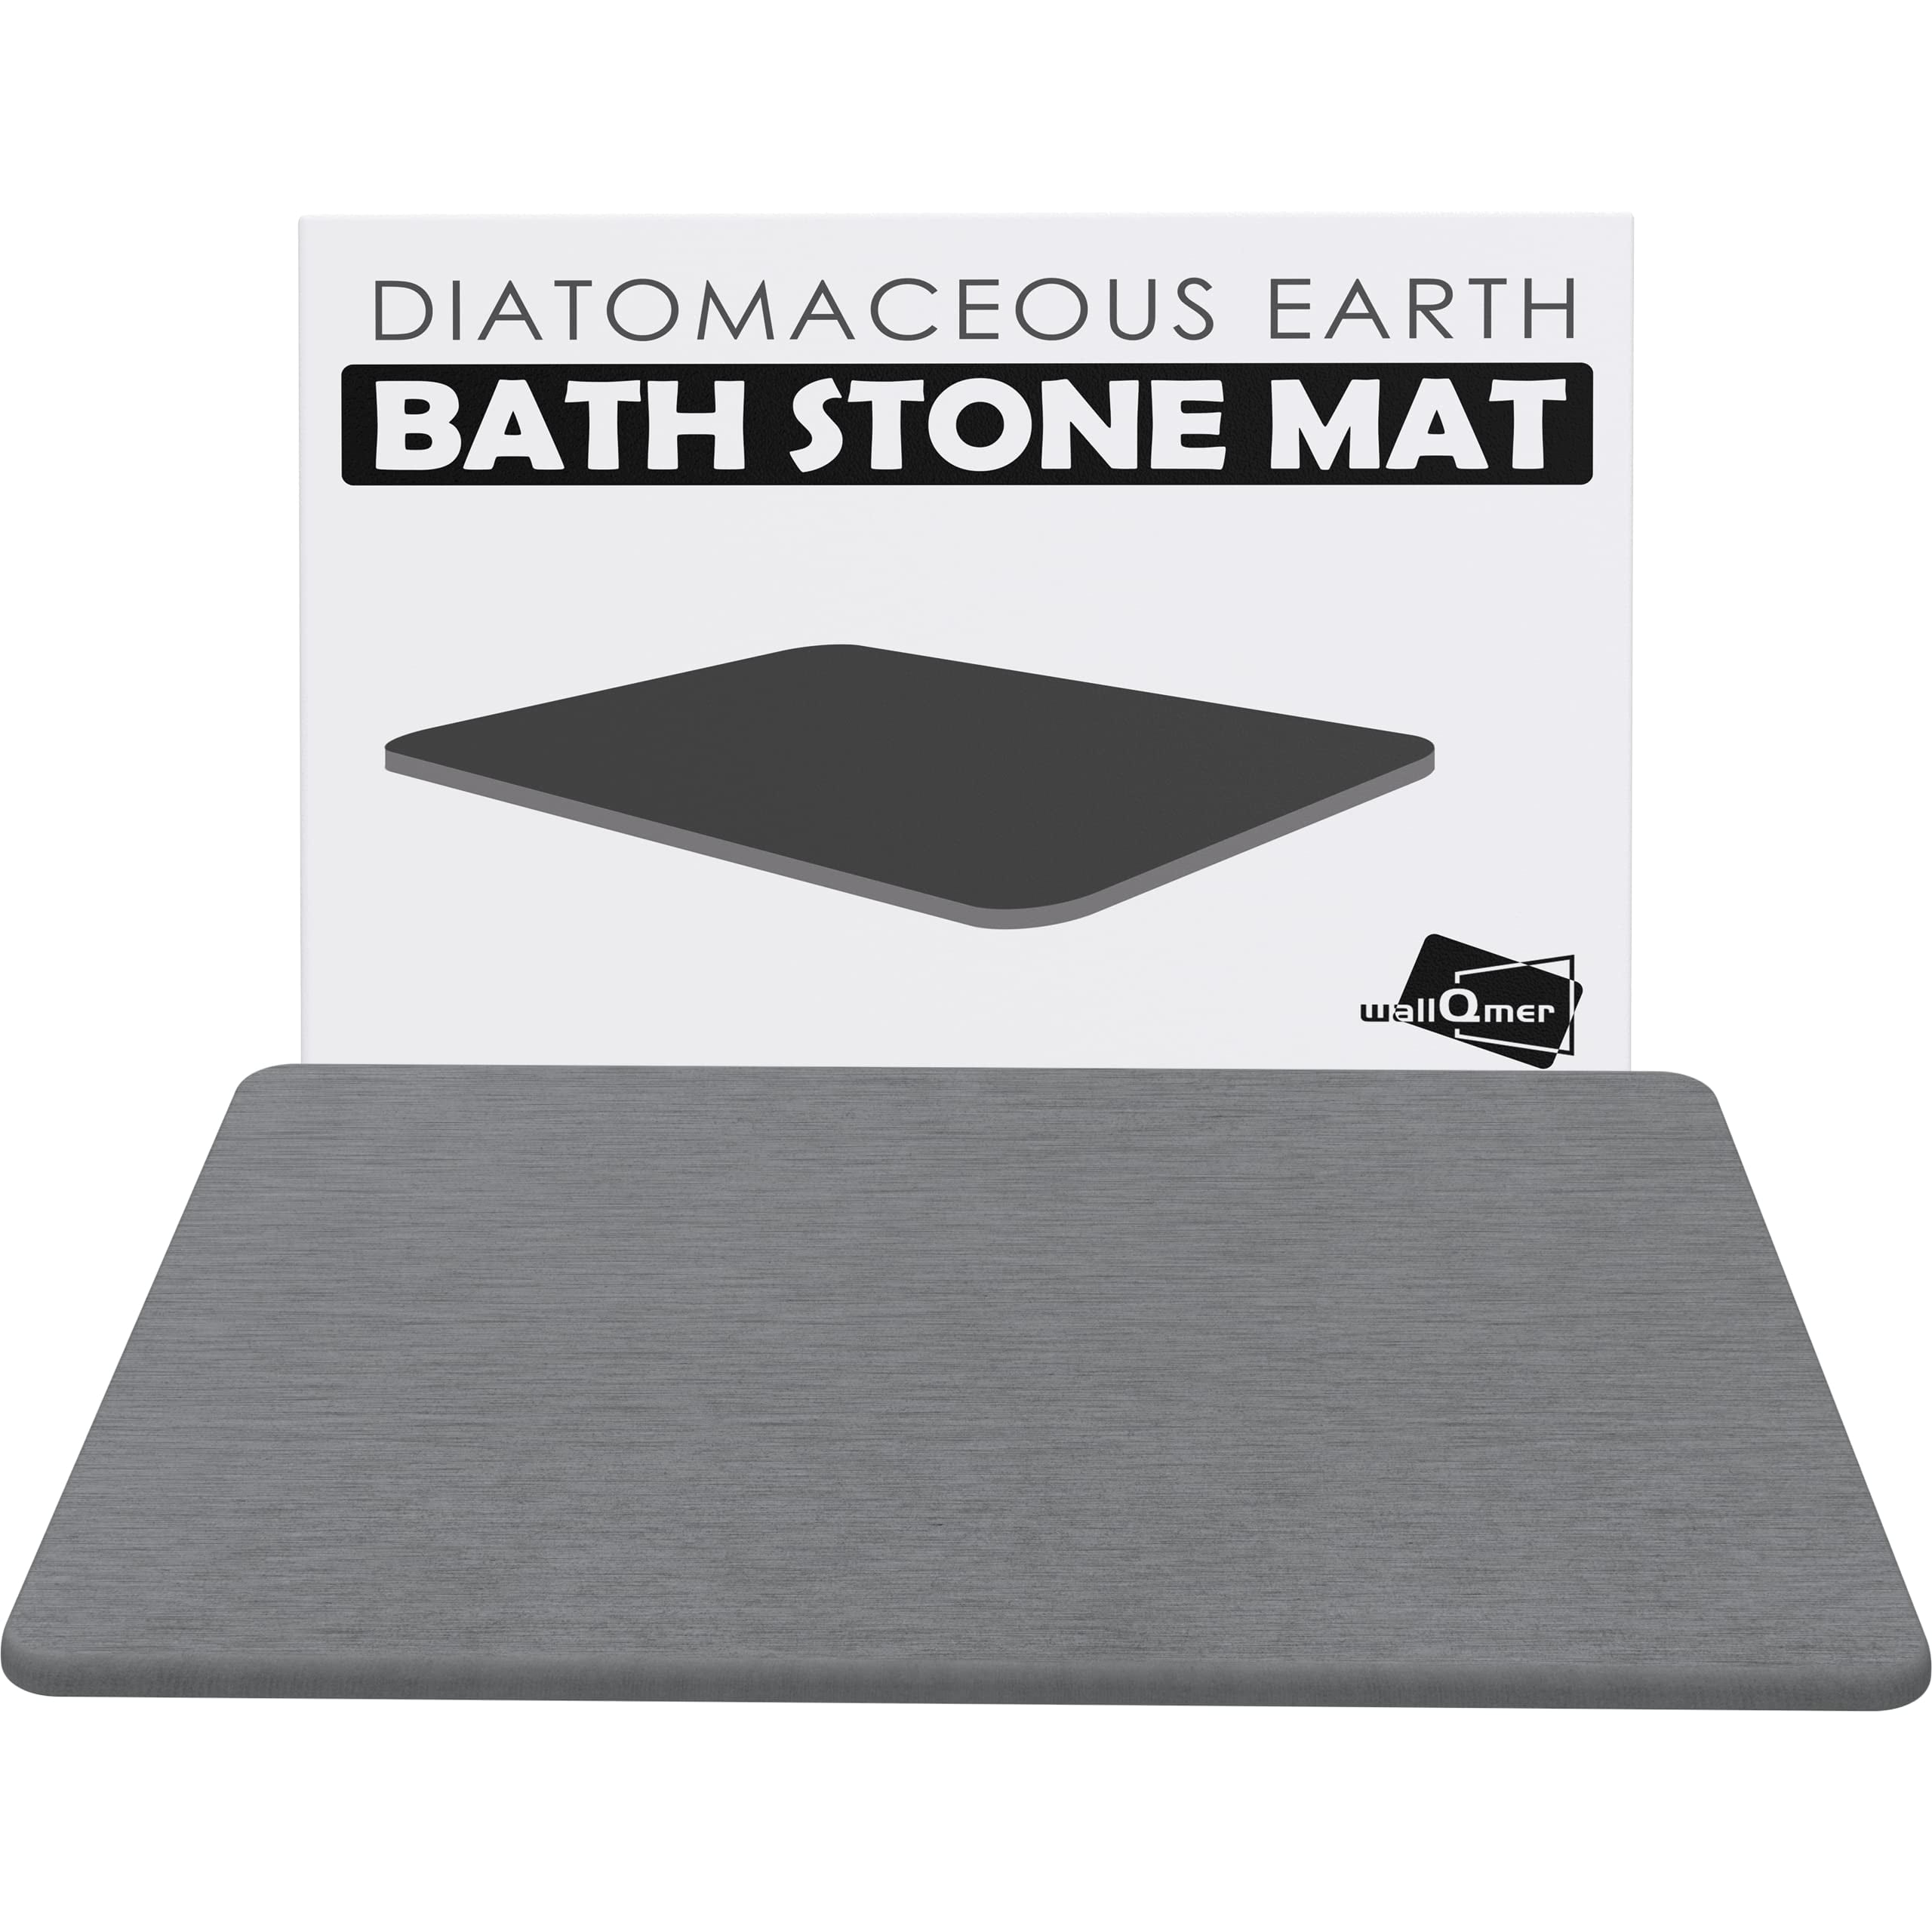 HBlife Stone Bath Mat, Diatomaceous Earth Bath Mat Bathmat, Non Slip Super Absorbent Quick Drying Diatomite Stone Bath Shower Mat for Bathroom, 23 inch x 15